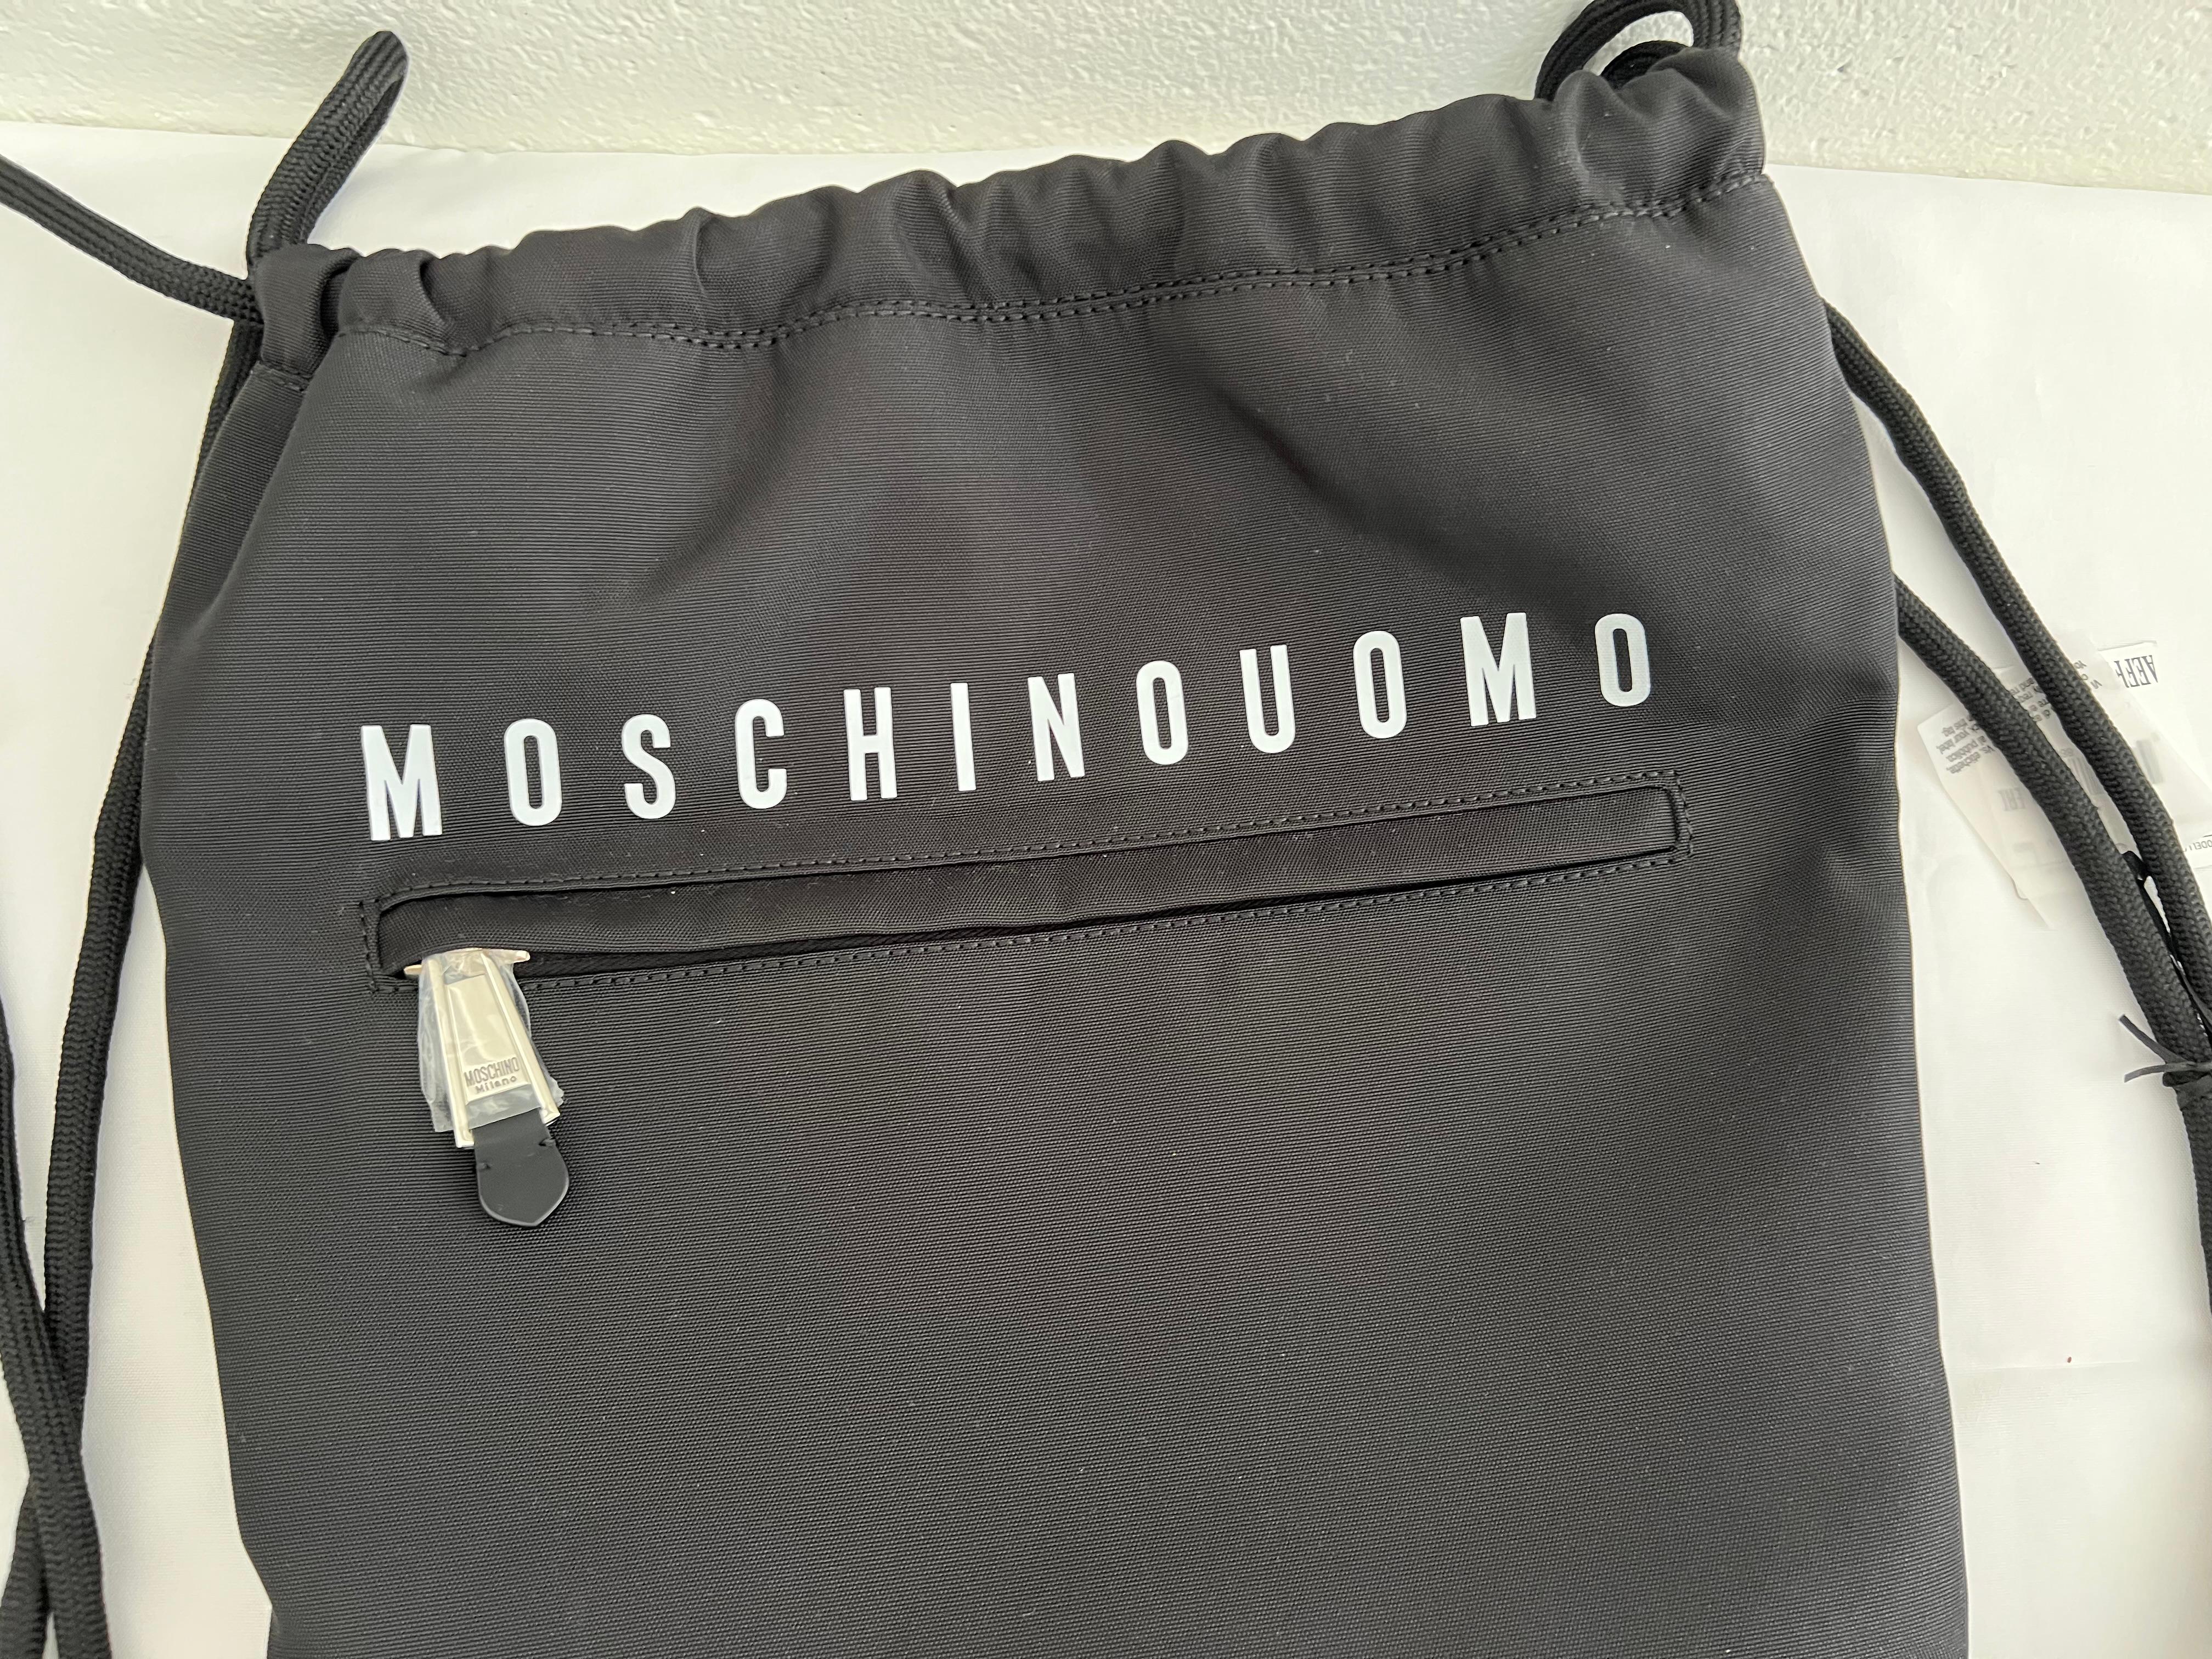 Women's or Men's AW20 Moschino Couture Jeremy Scott Black Rectangular Men's Black Sack Backpack For Sale